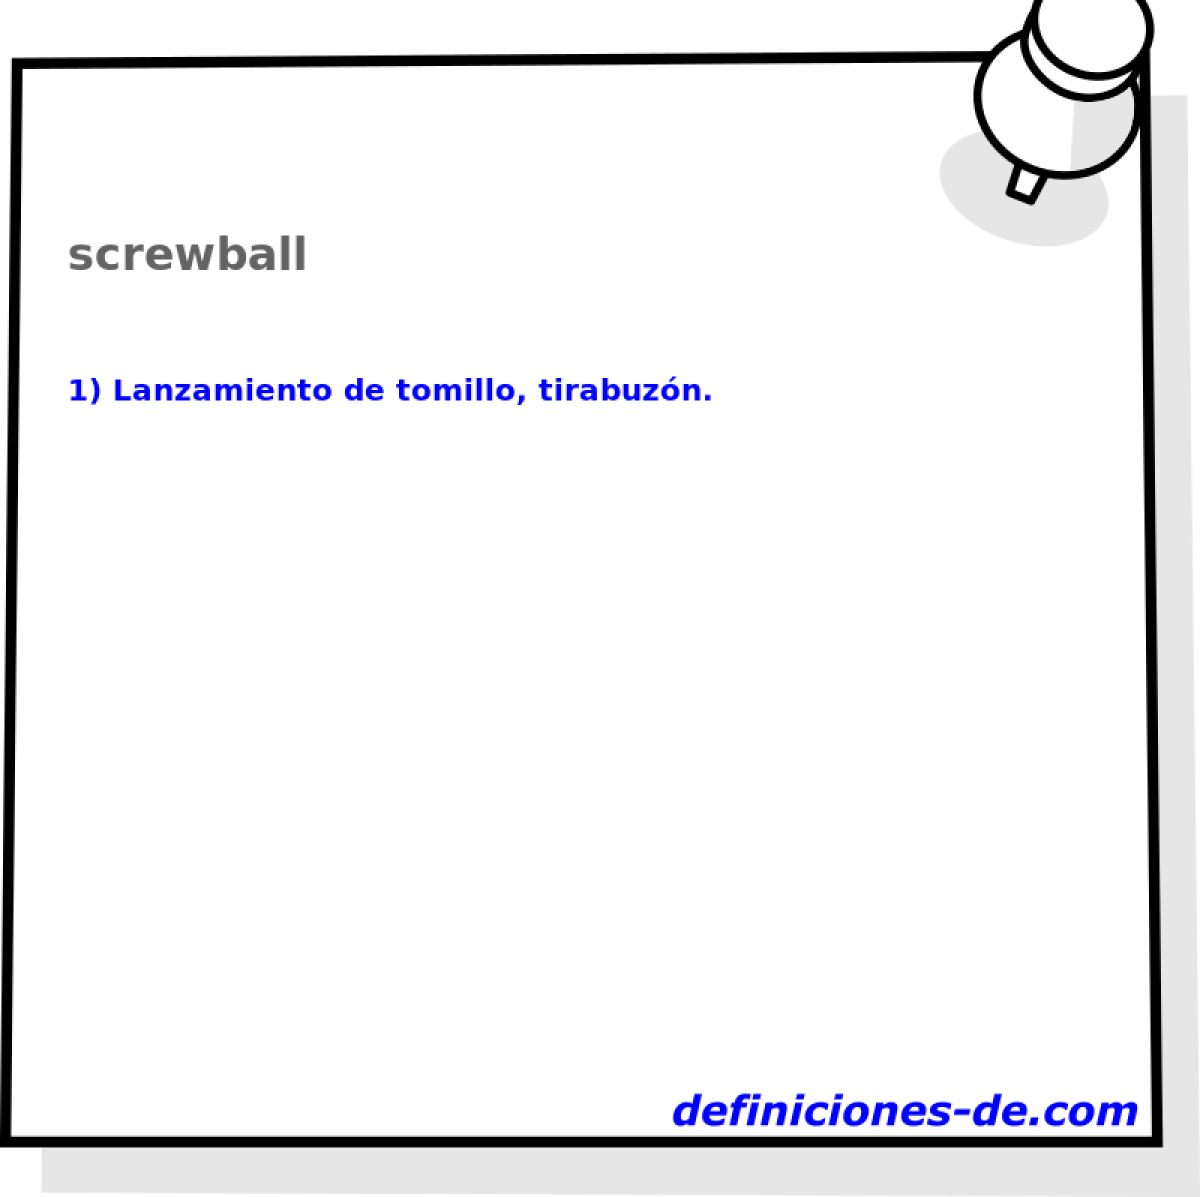 screwball 